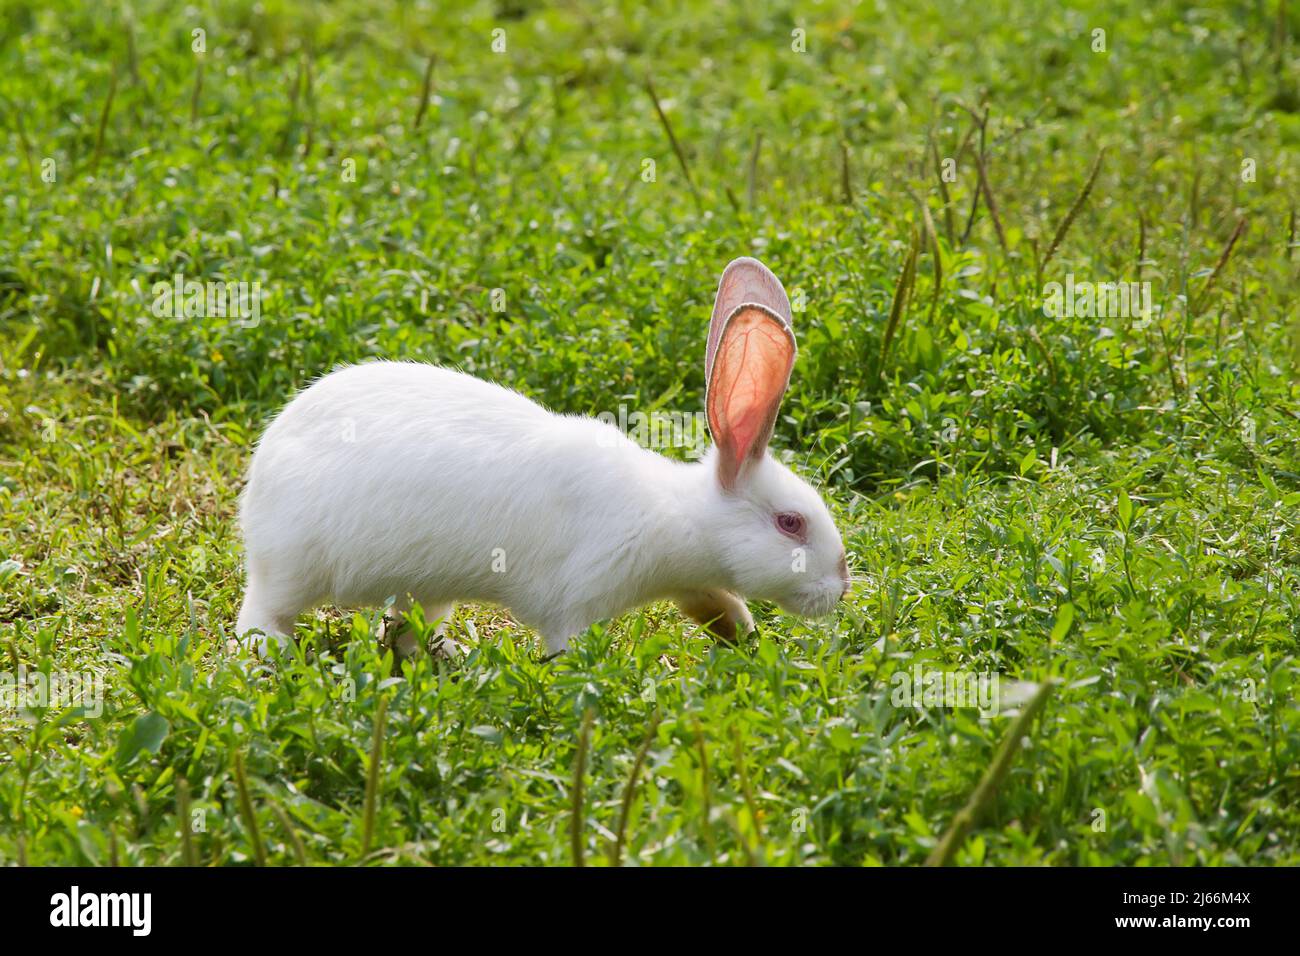 Decorative rabbits. Decorative white rabbit on green grass. Stock Photo